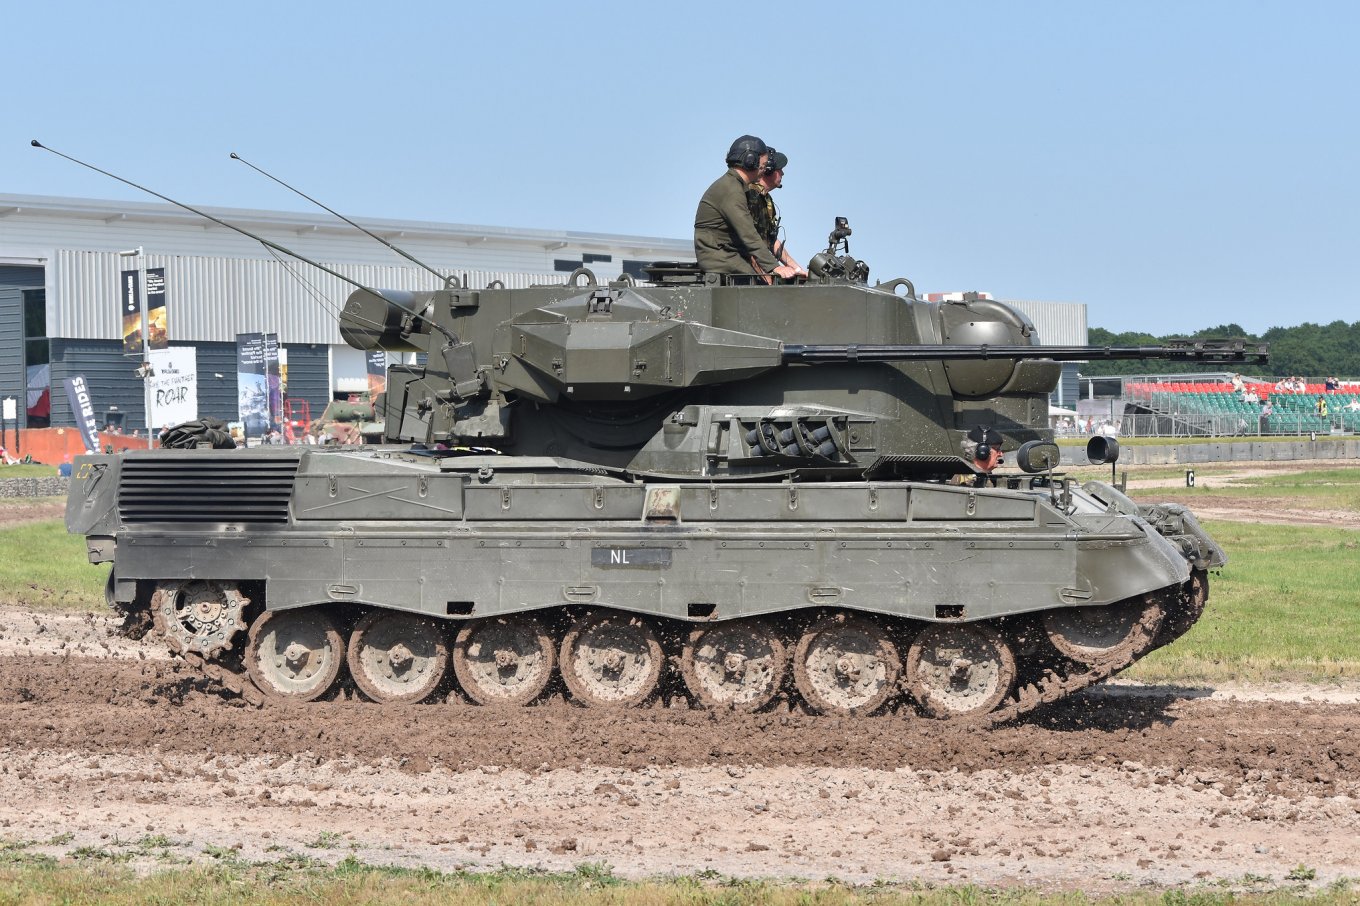 Armed Forces of Ukraine Got Three German Gepard Self-Propelled Anti-Aircraft Guns, Defense Express